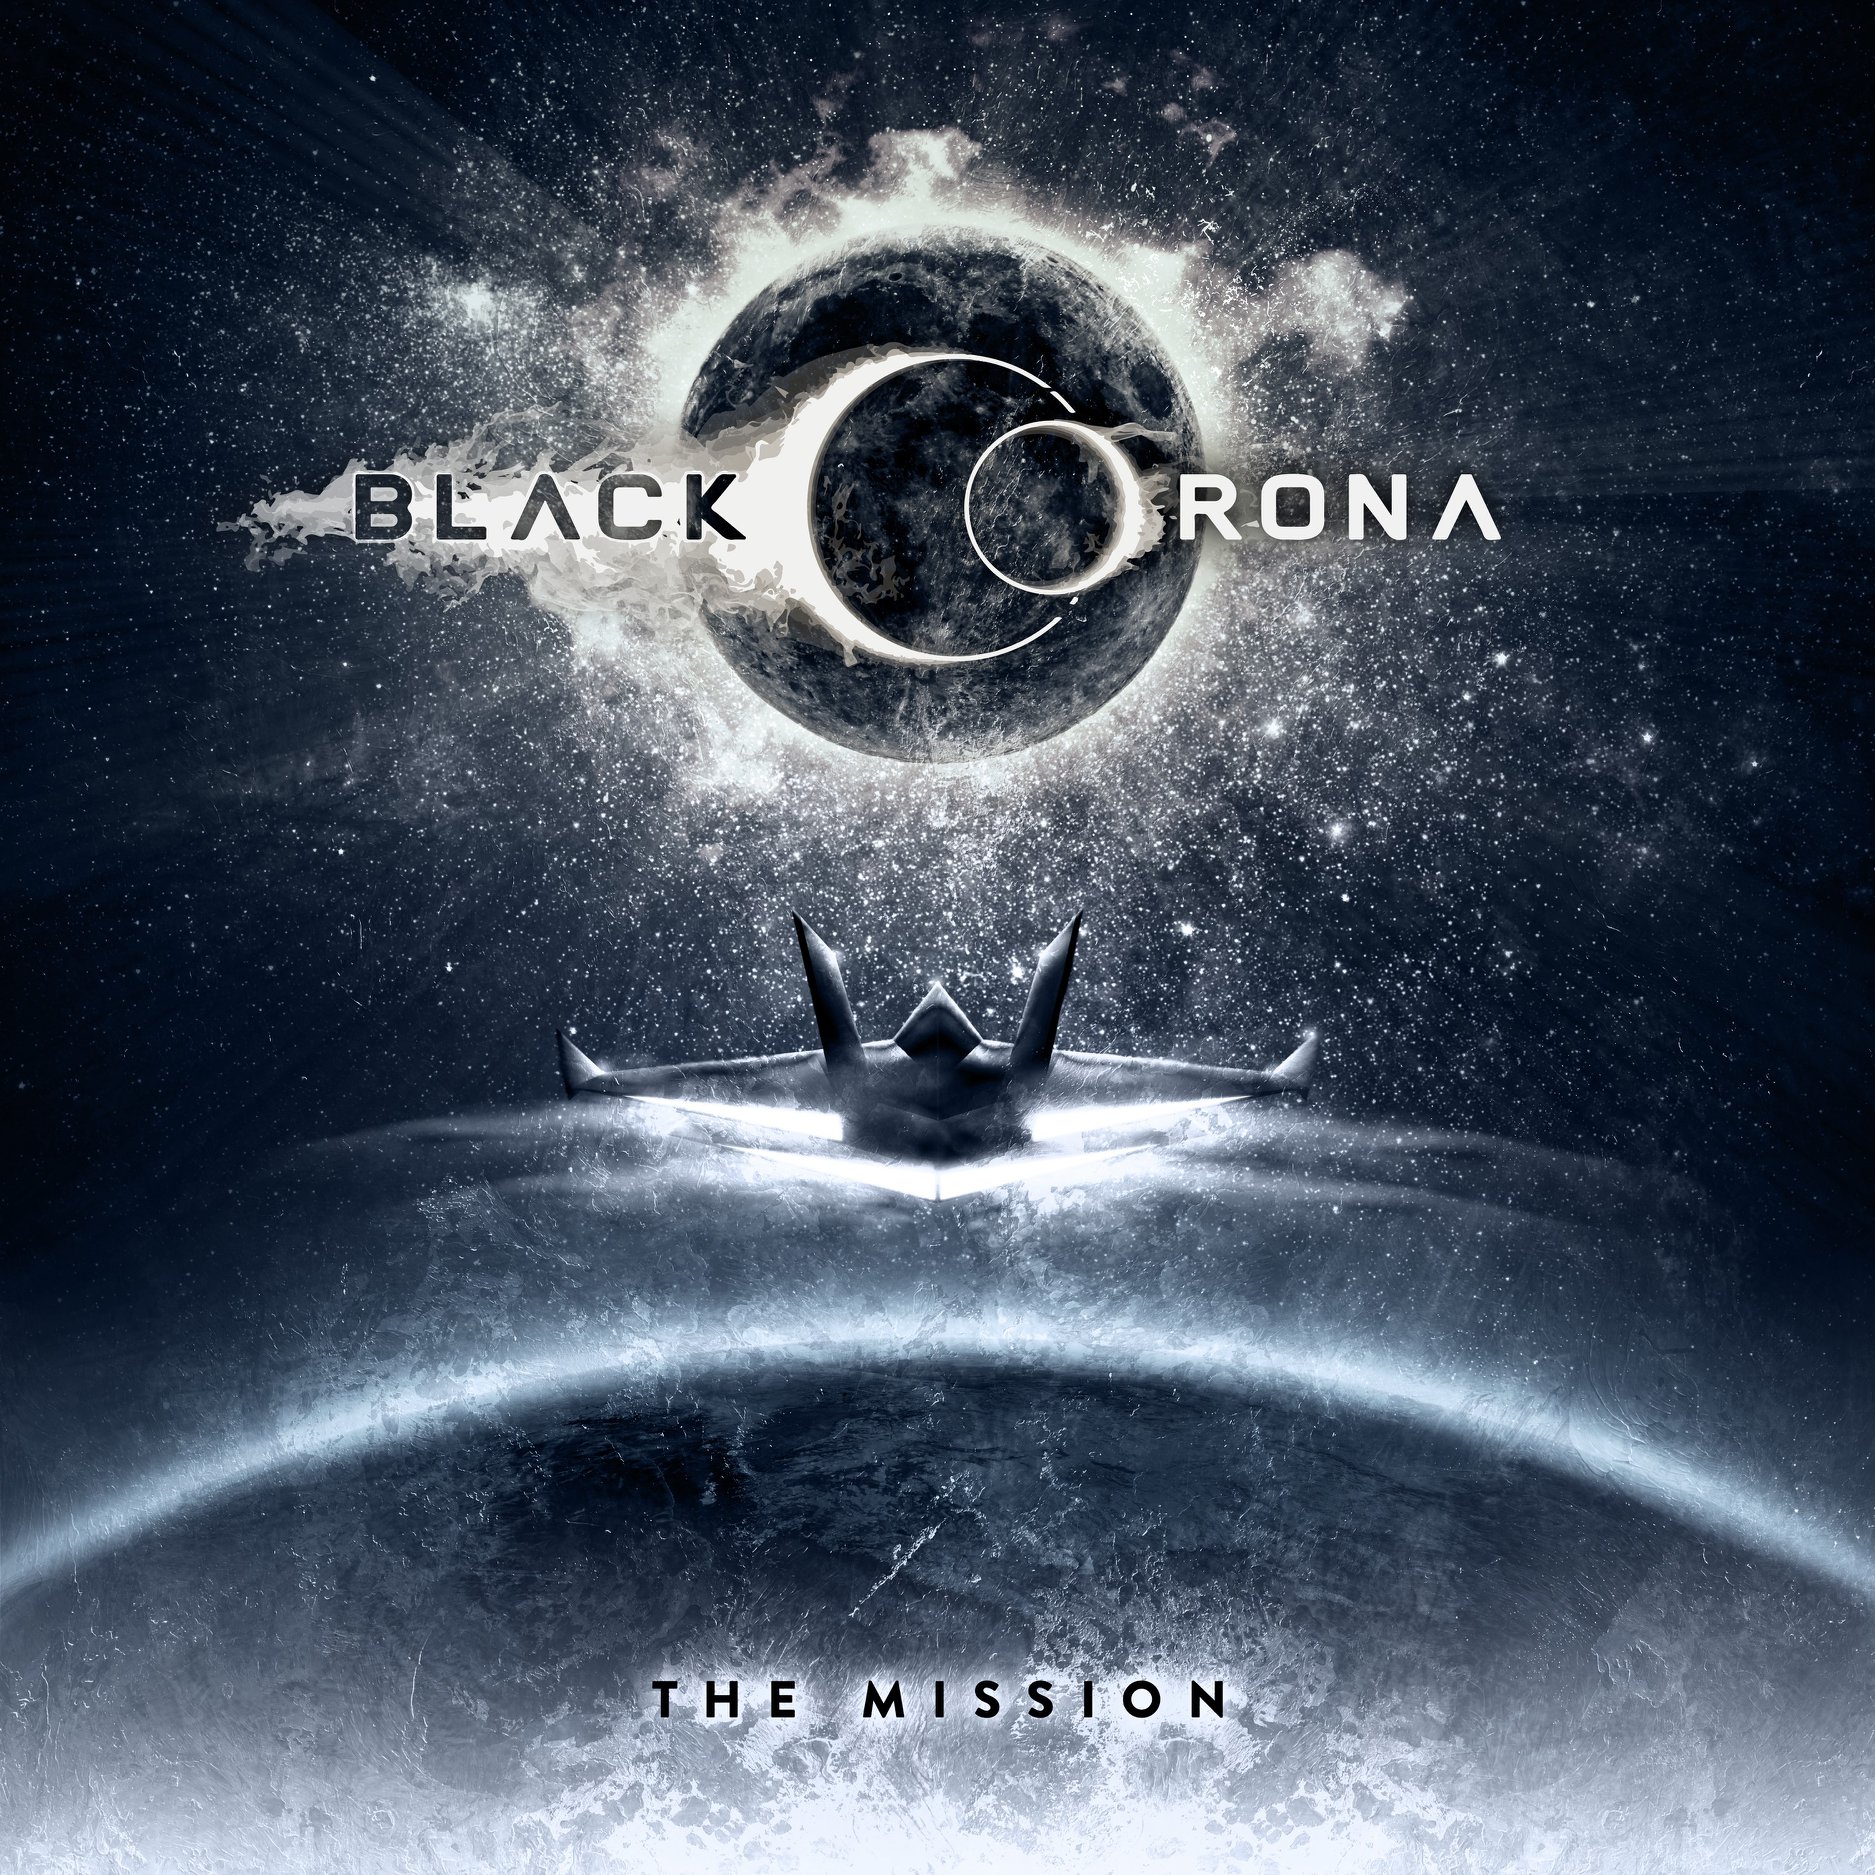 [Reseña] “The Mission”, primer lanzamiento del grupo Black Corona